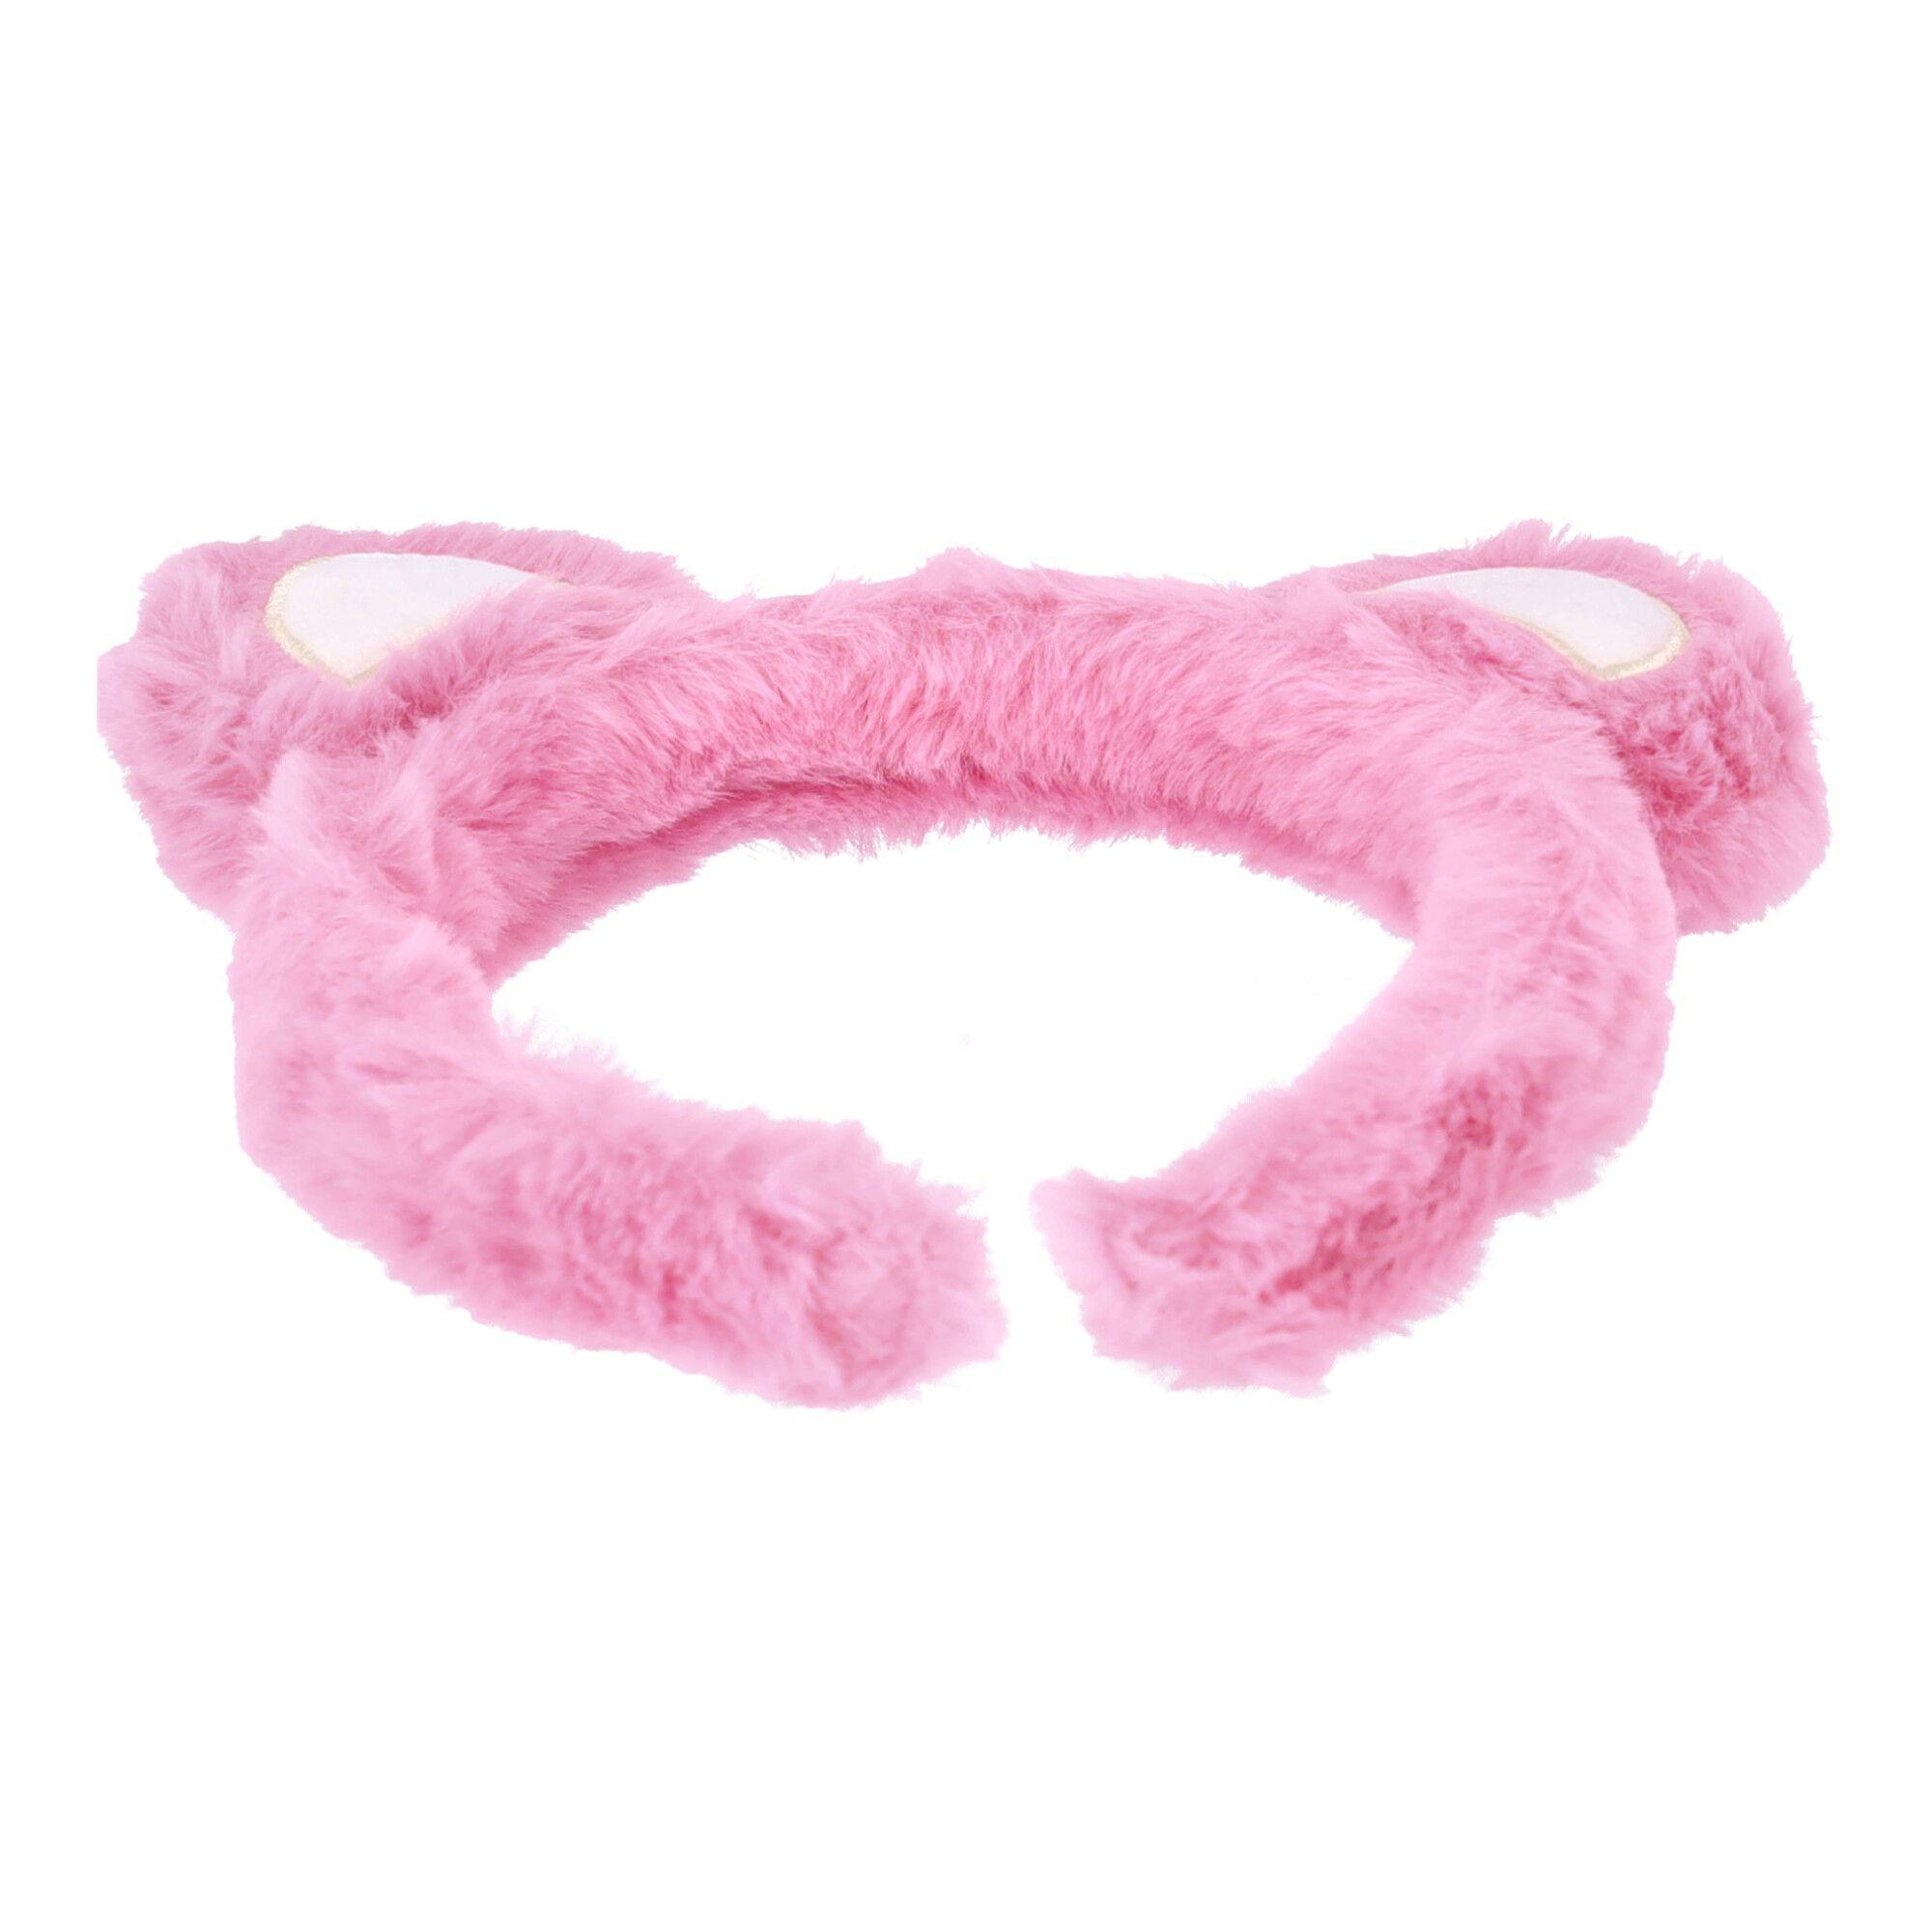 Plush headband with bear ears - bright pink.